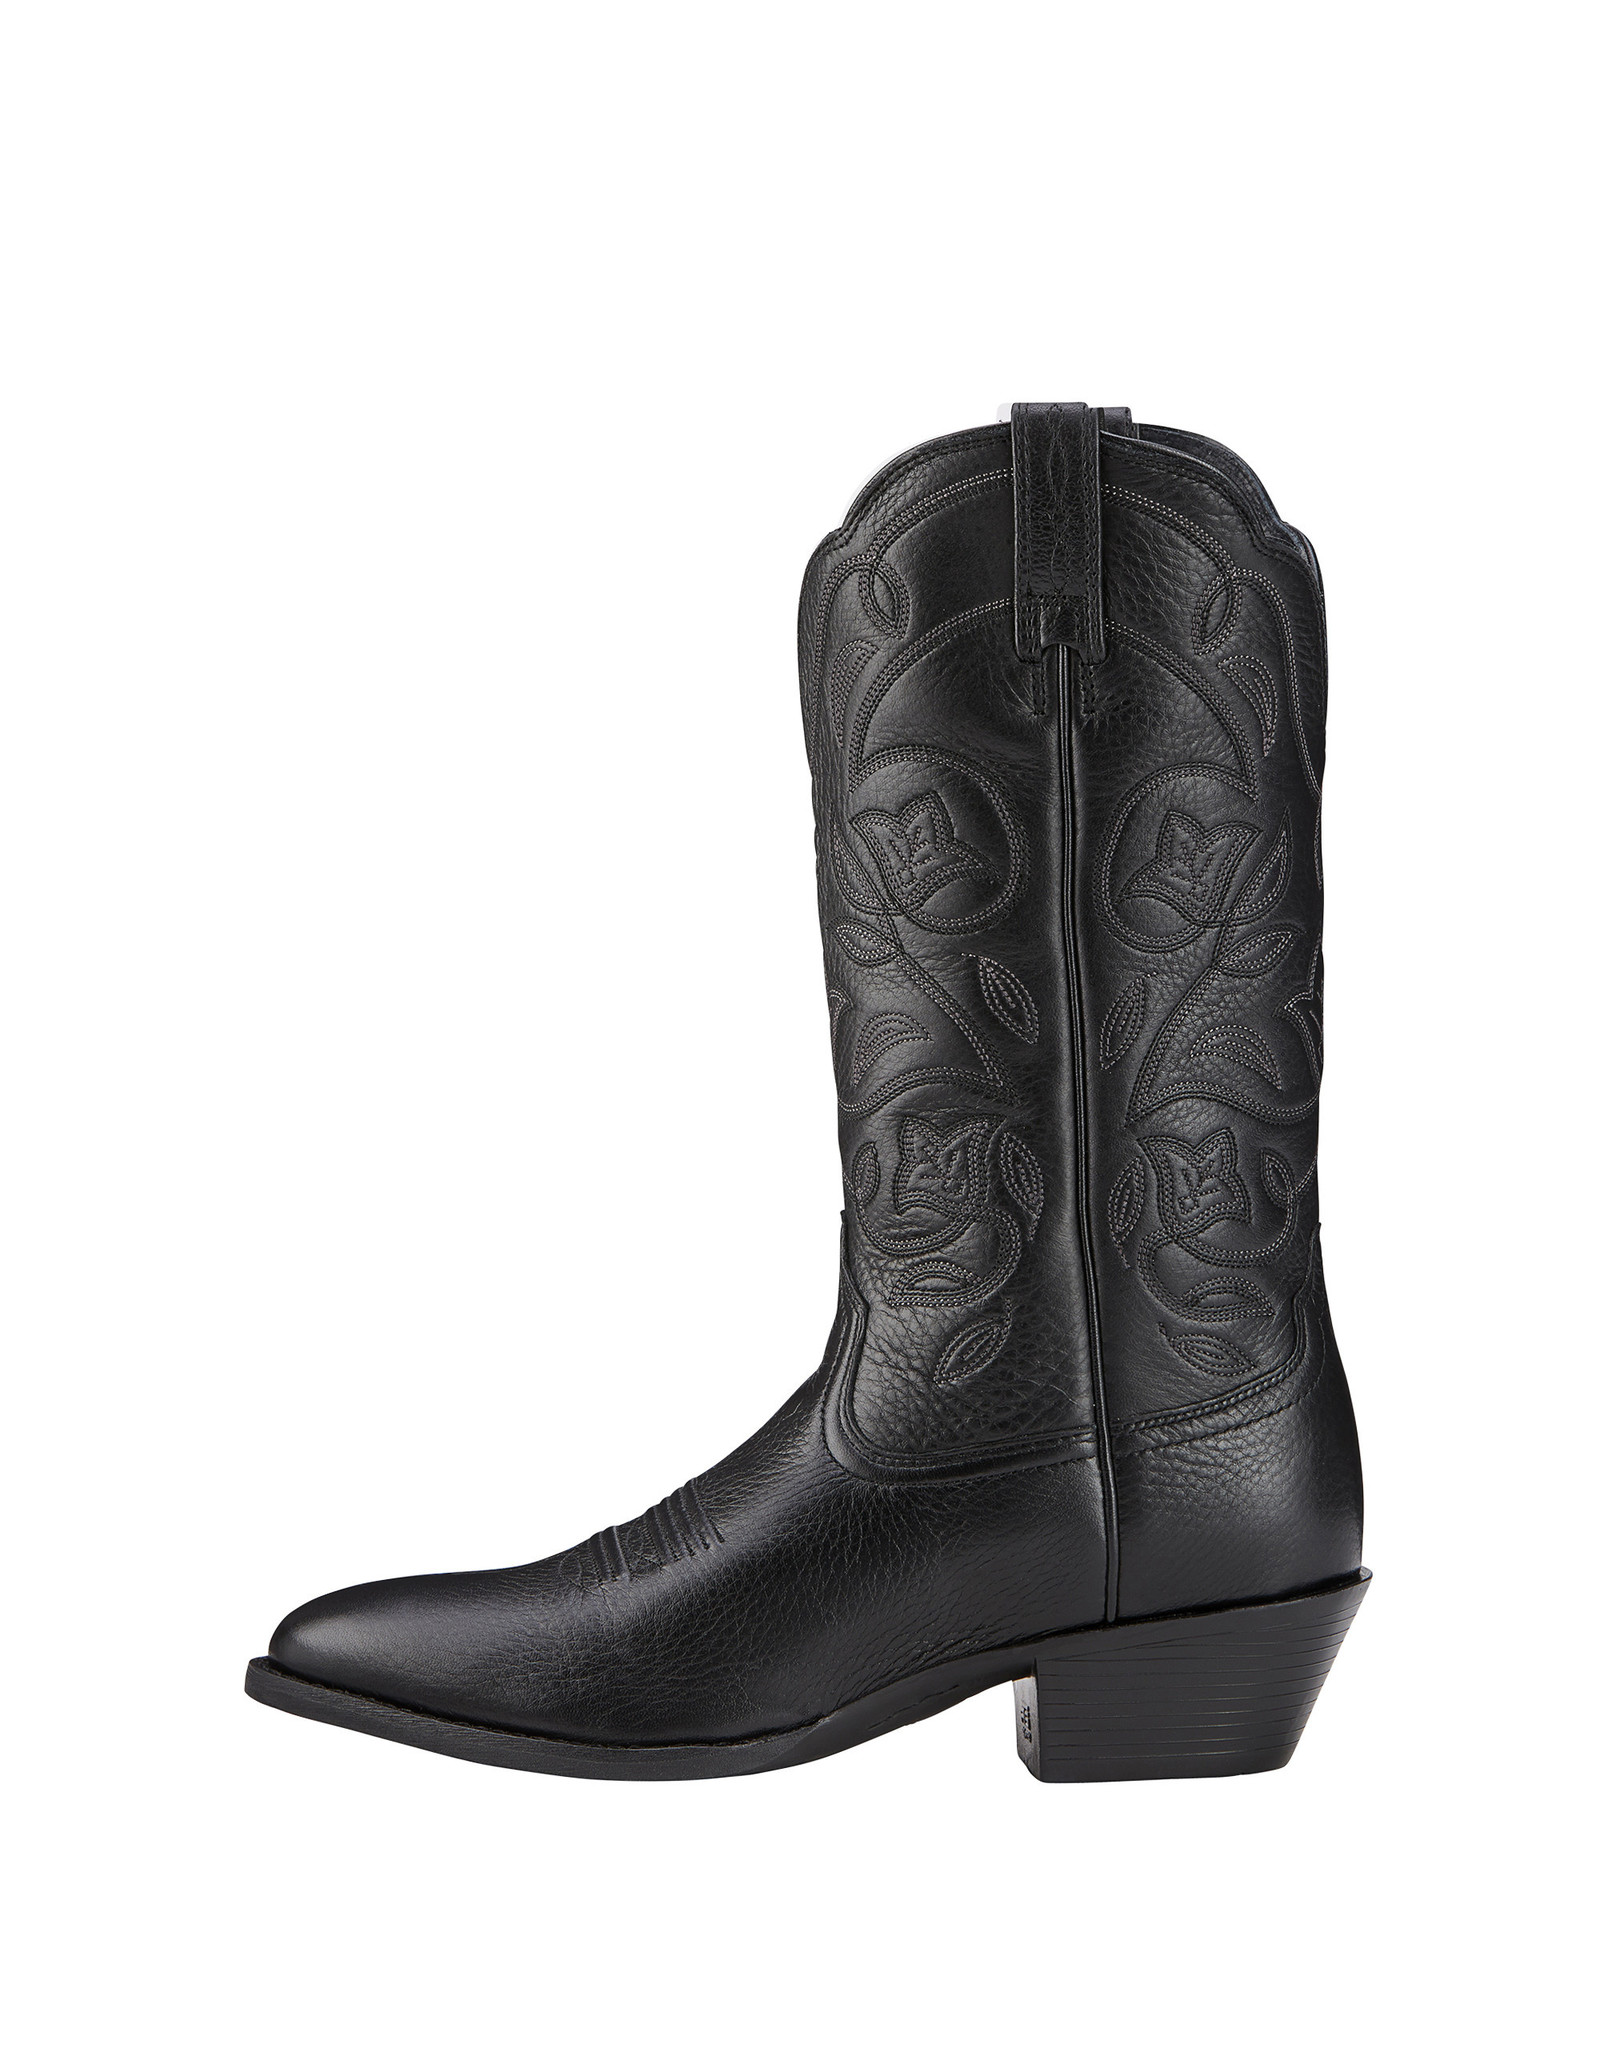 Ariat Ladies Heritage R Toe Black 10001037 Western Boots